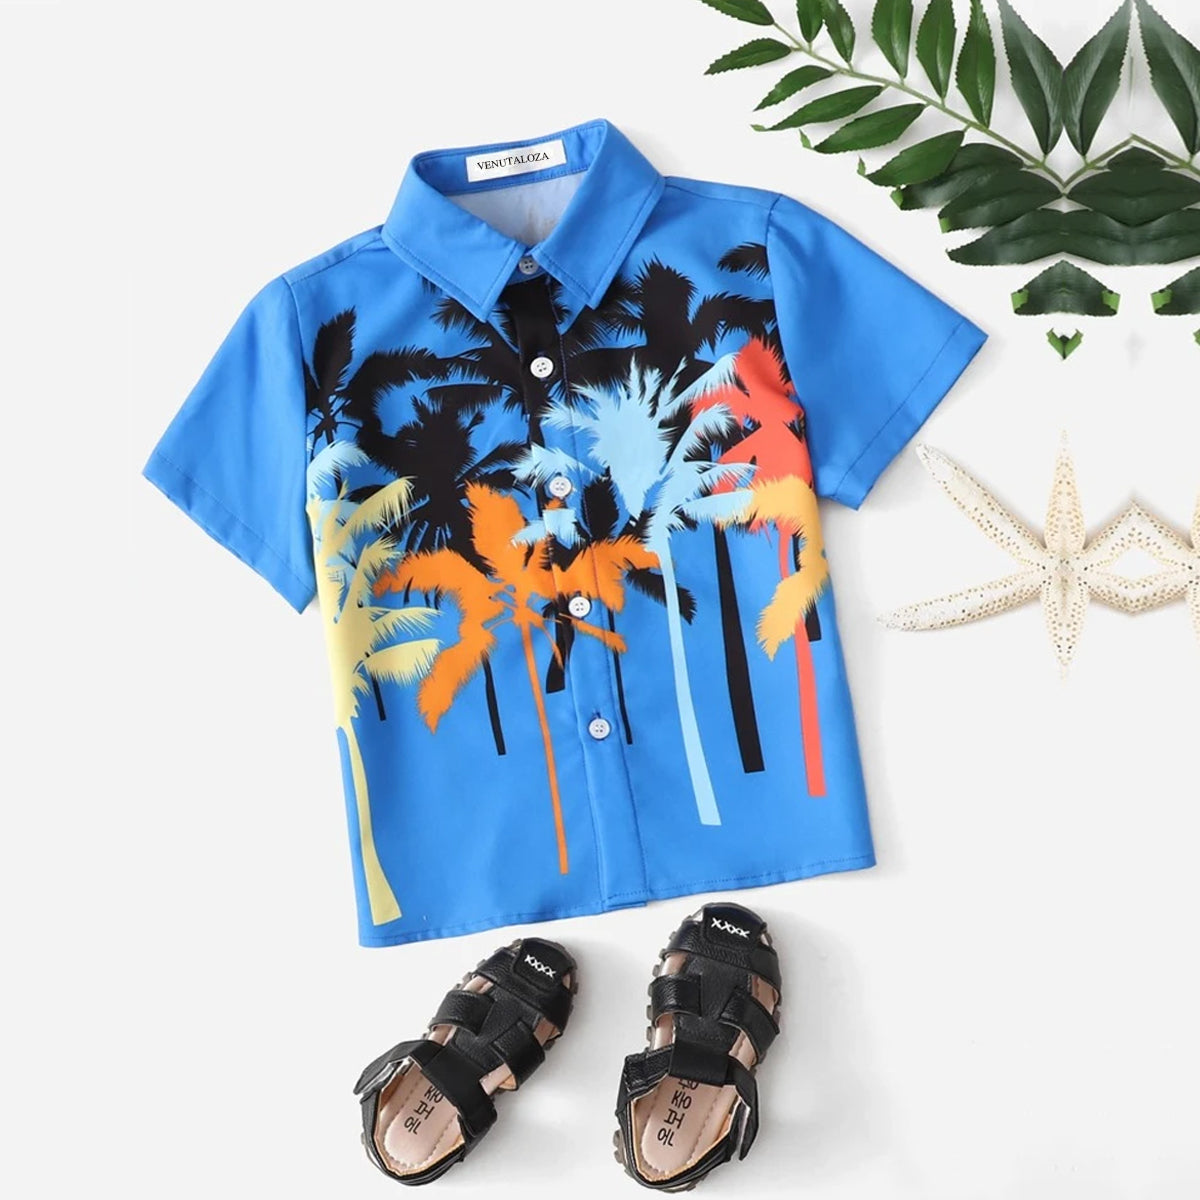 Venutaloza Boy's Coconut Tree Blue Print Shirt For Boy.